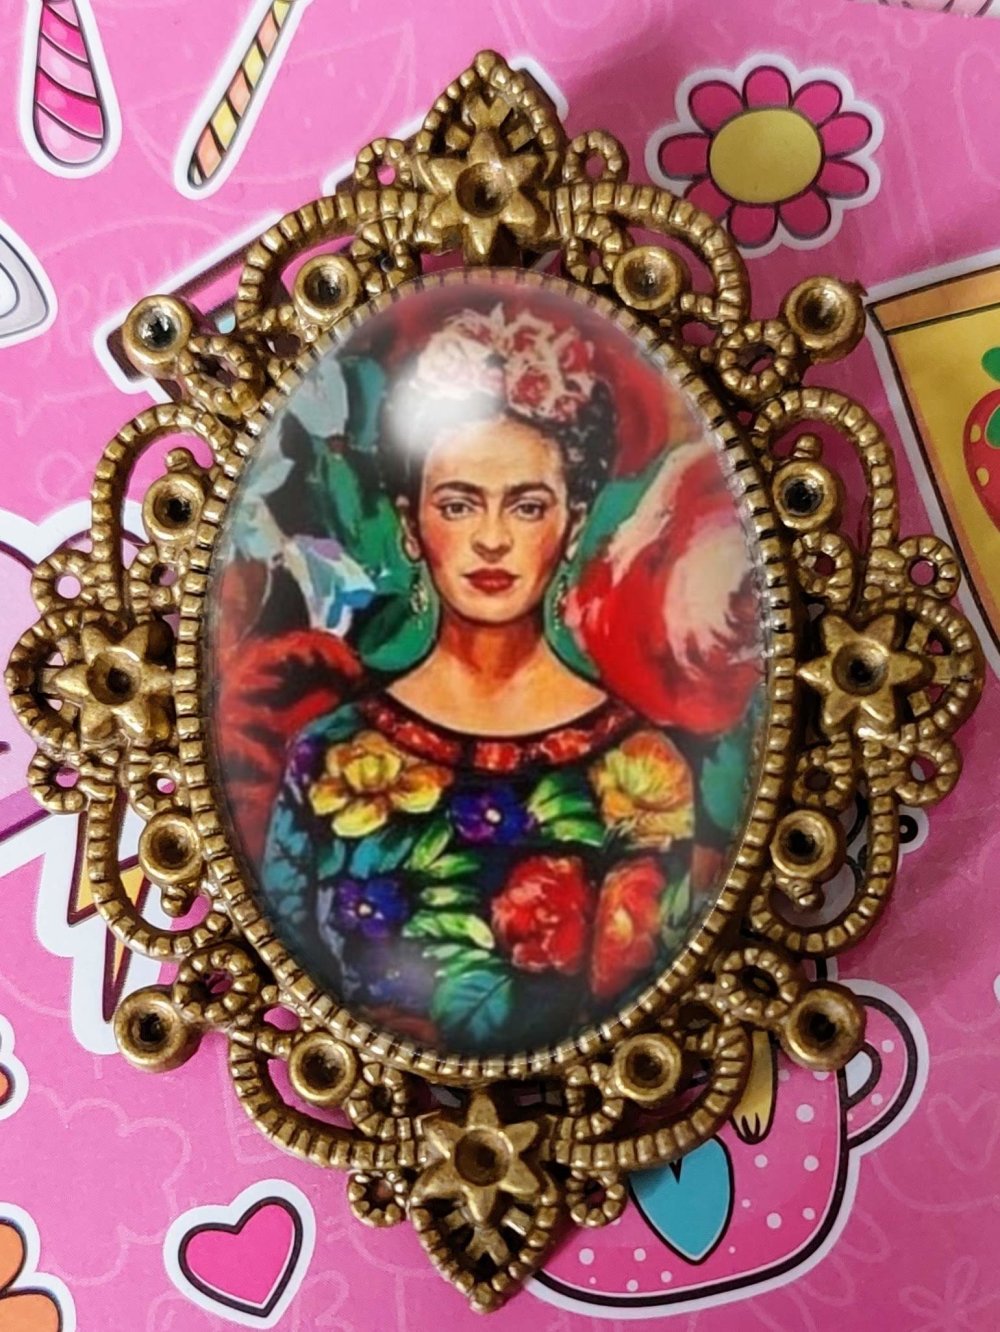 Broche retro vintage mexican frida kahlo penny dreadful halloween gothique  rockabilly pin up magicienne sorciere curiosites - Un grand marché